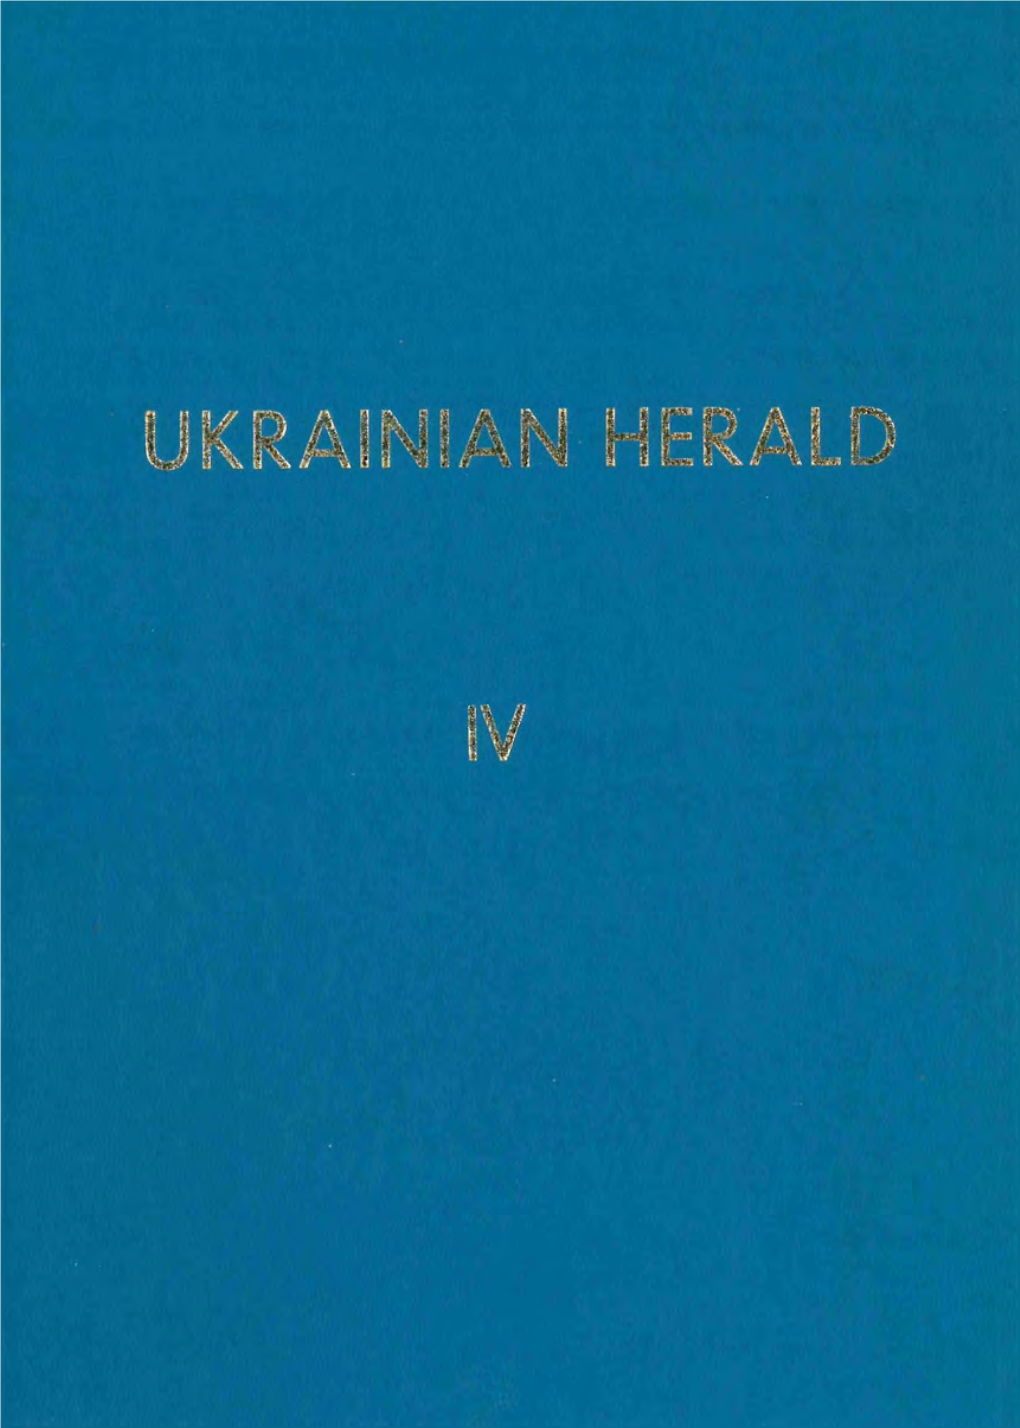 UKRAINIAN HERALD Issue IV Herstellung Druckgenossensehaft „Cicero" Egmbh, 8 Miinchen 80, Zeppelinstr